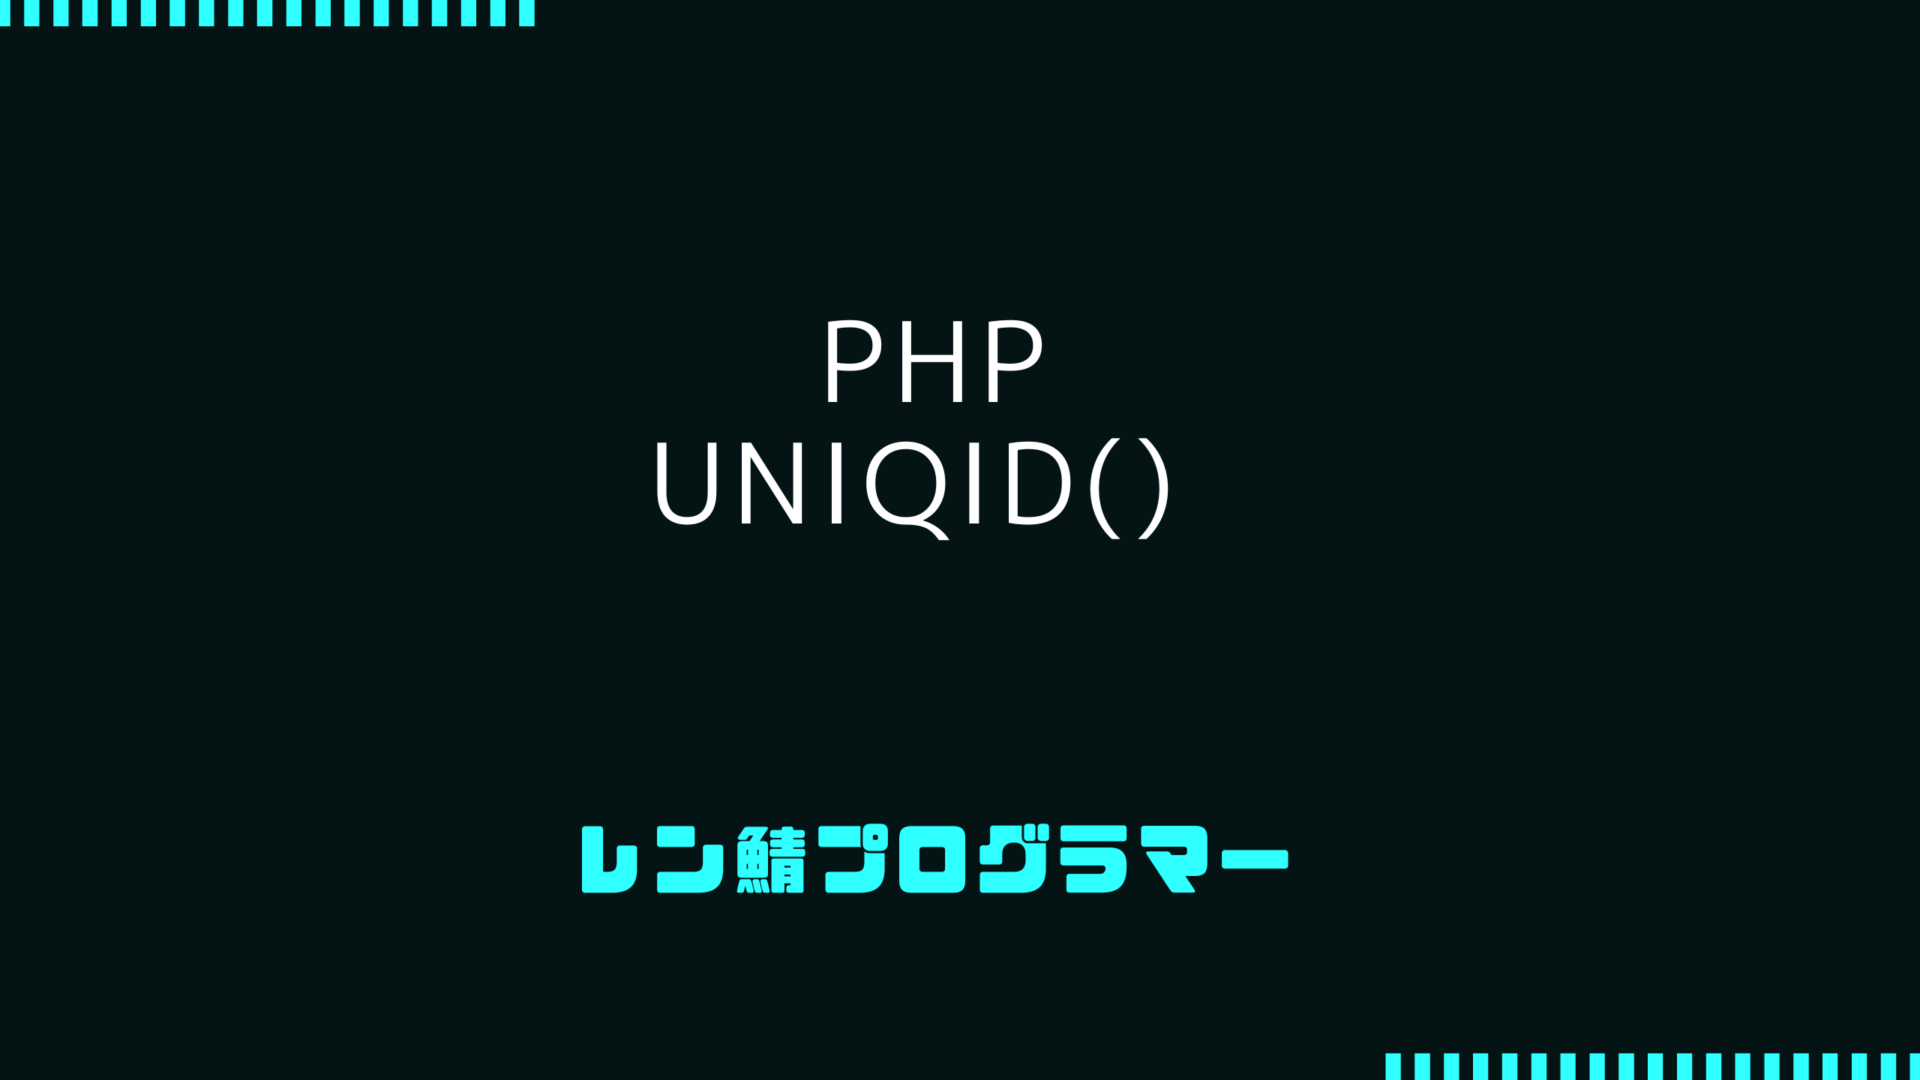 PHPでuniqid()を安全に使うために試行錯誤してみる